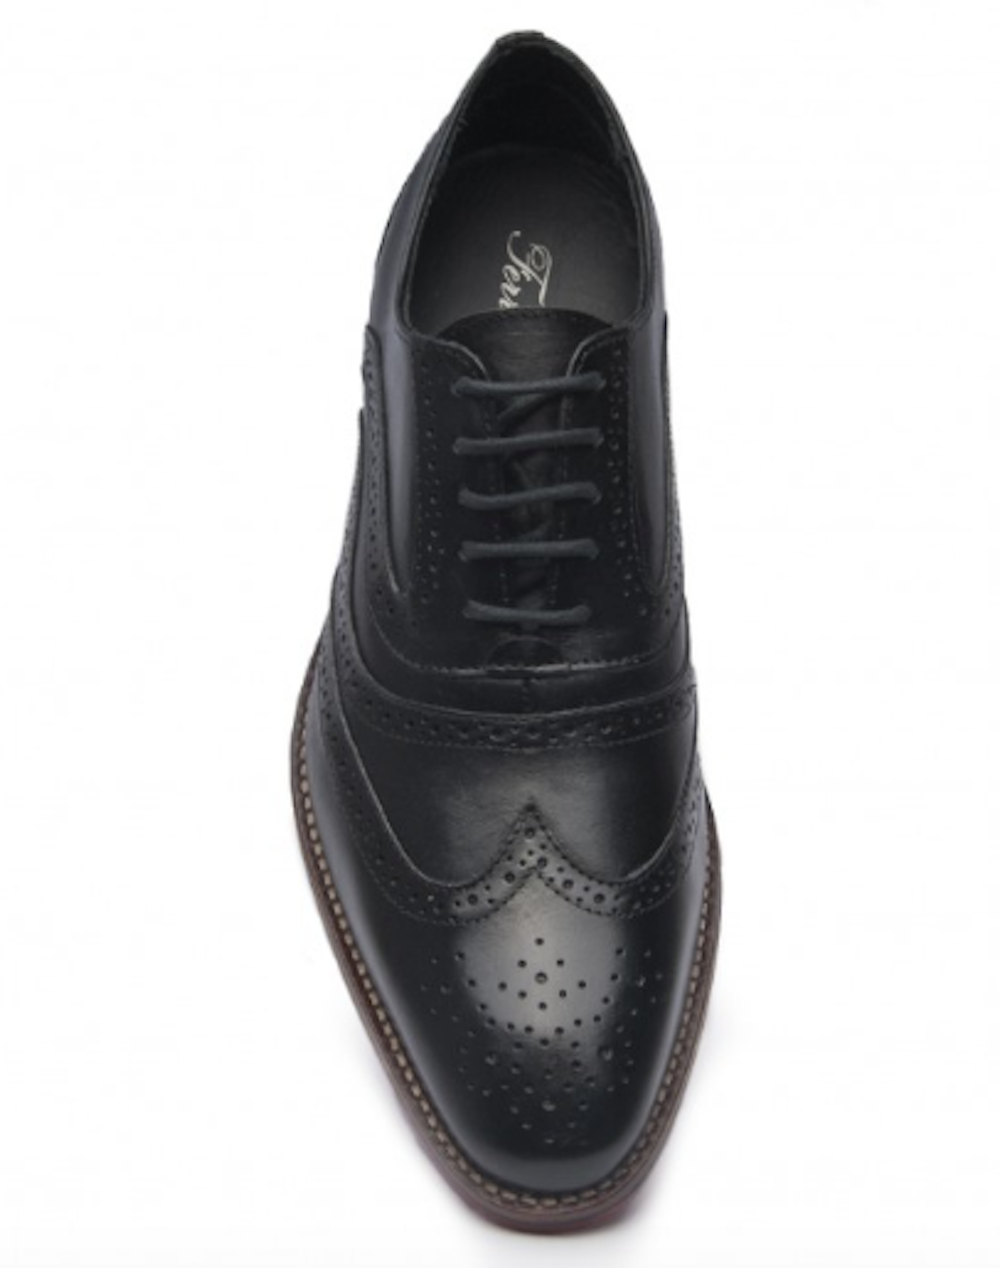 Sapatos masculinos de couro Ferracini Caravaggio 5677